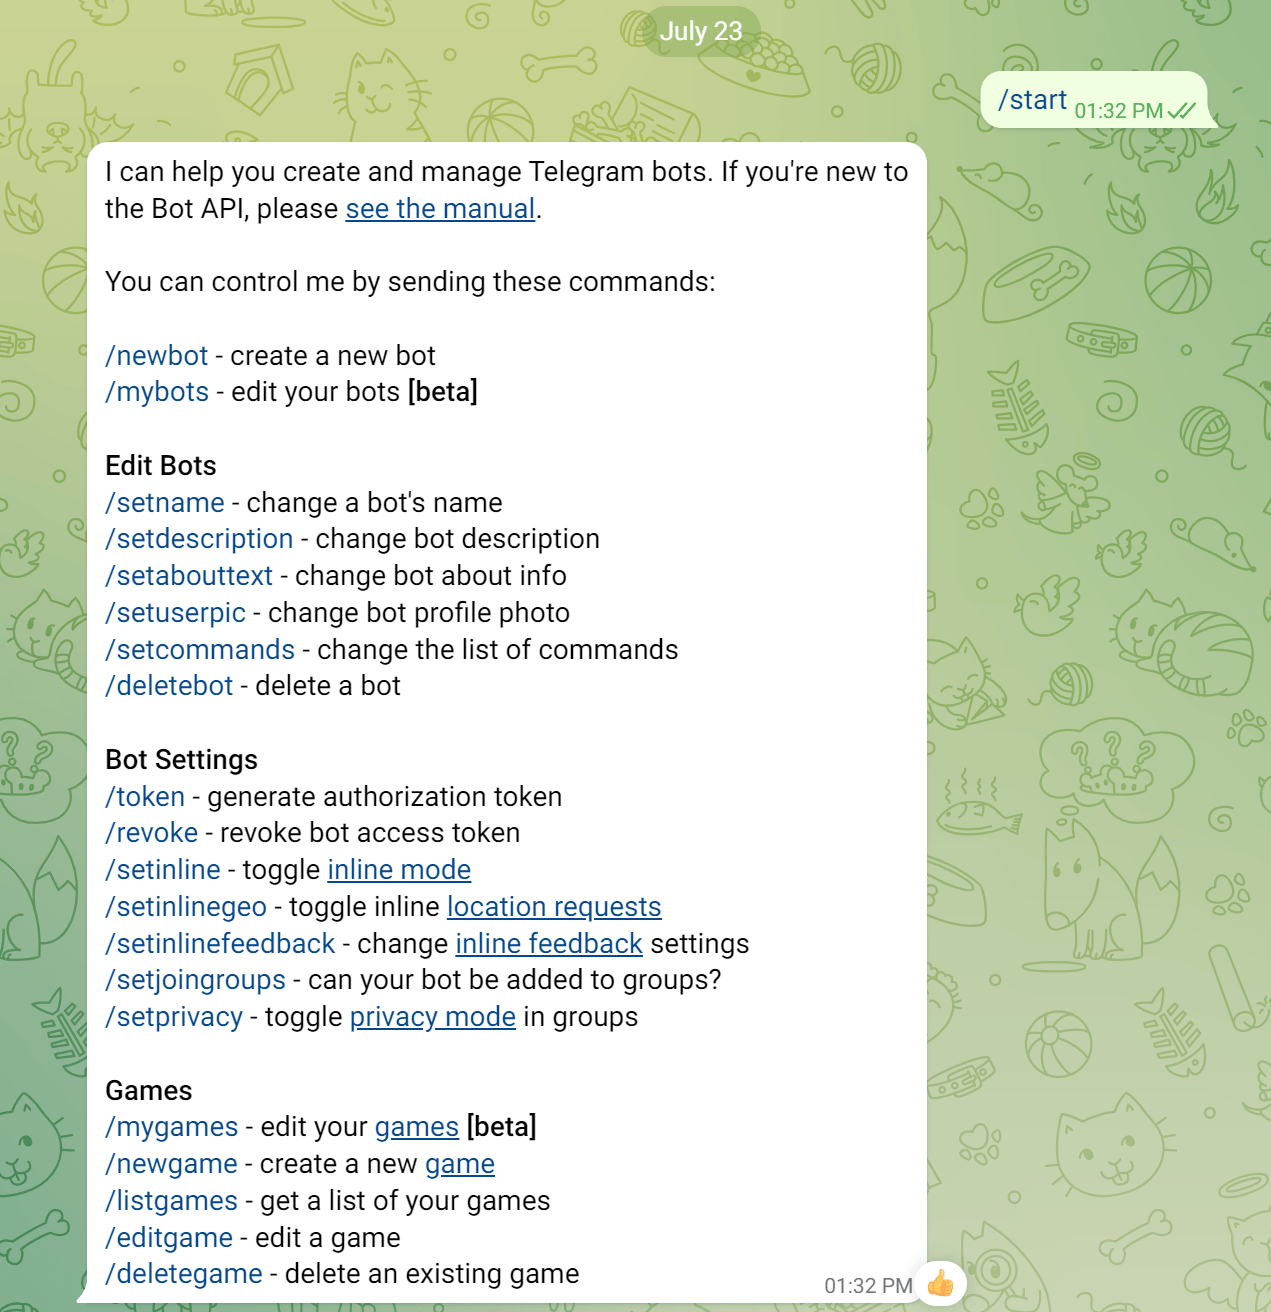 Create a new Telegram bot